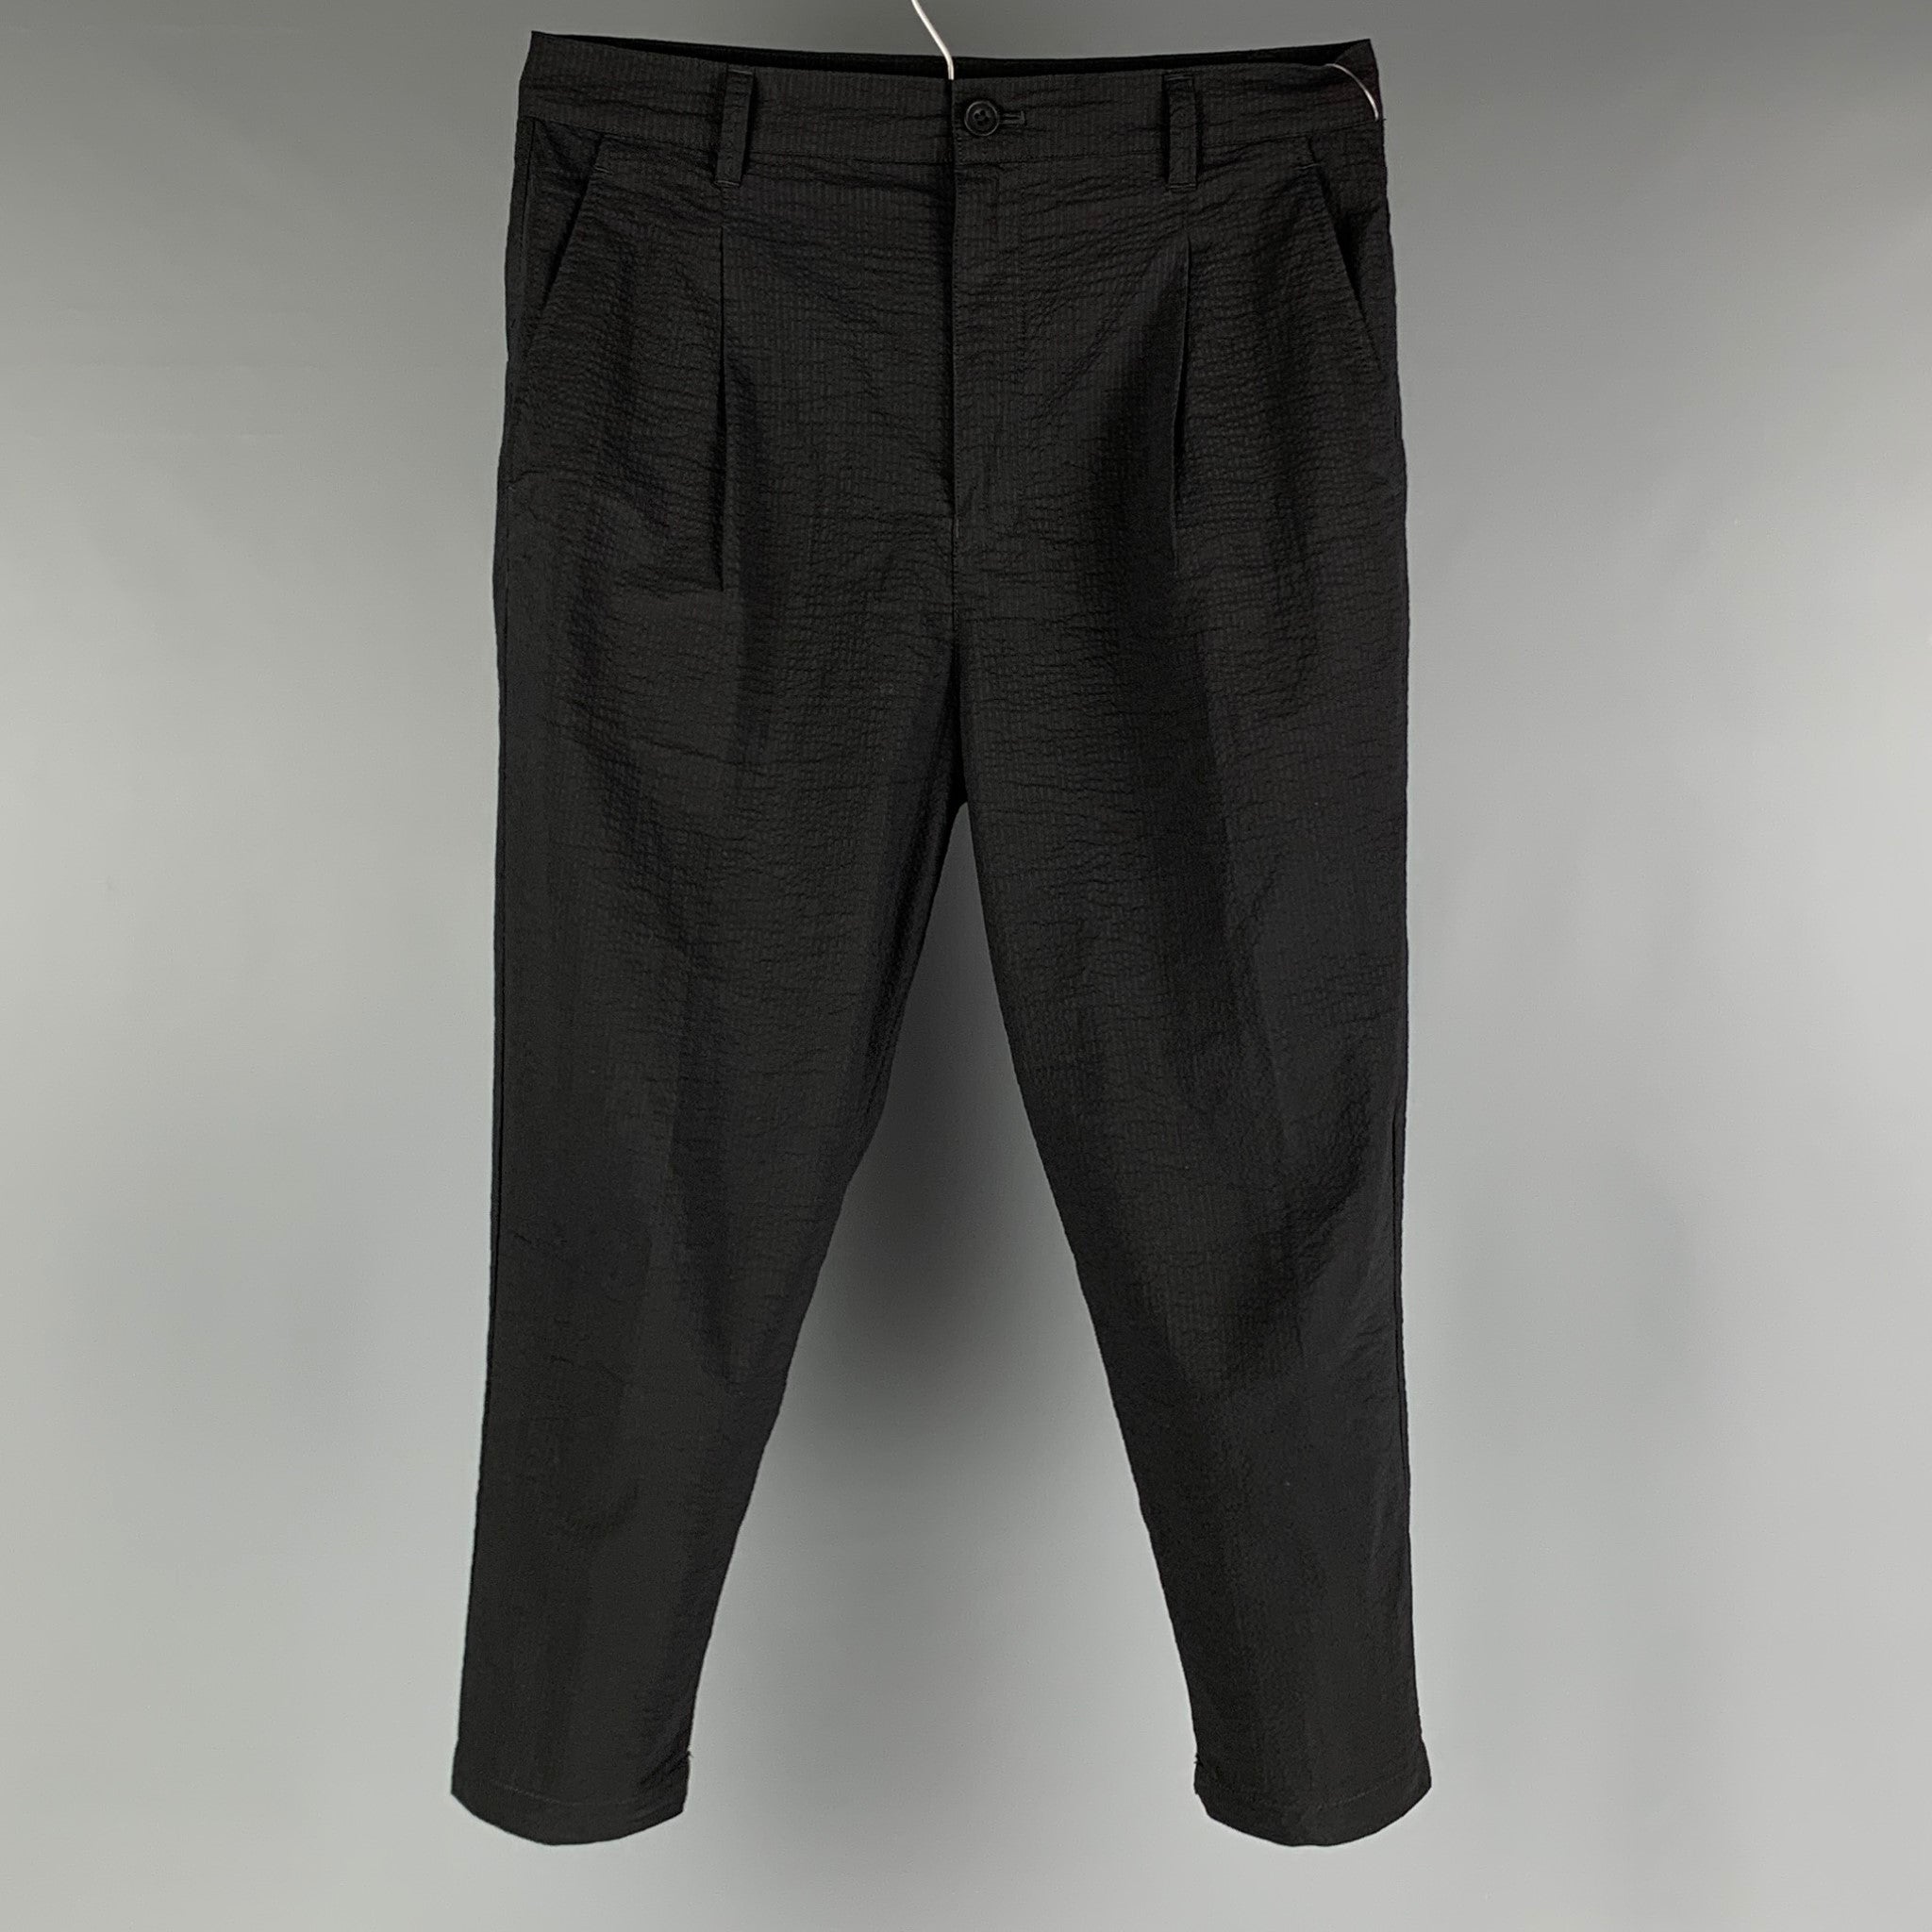 Lanvin Men's Wool Pants - Black - Casual Pants